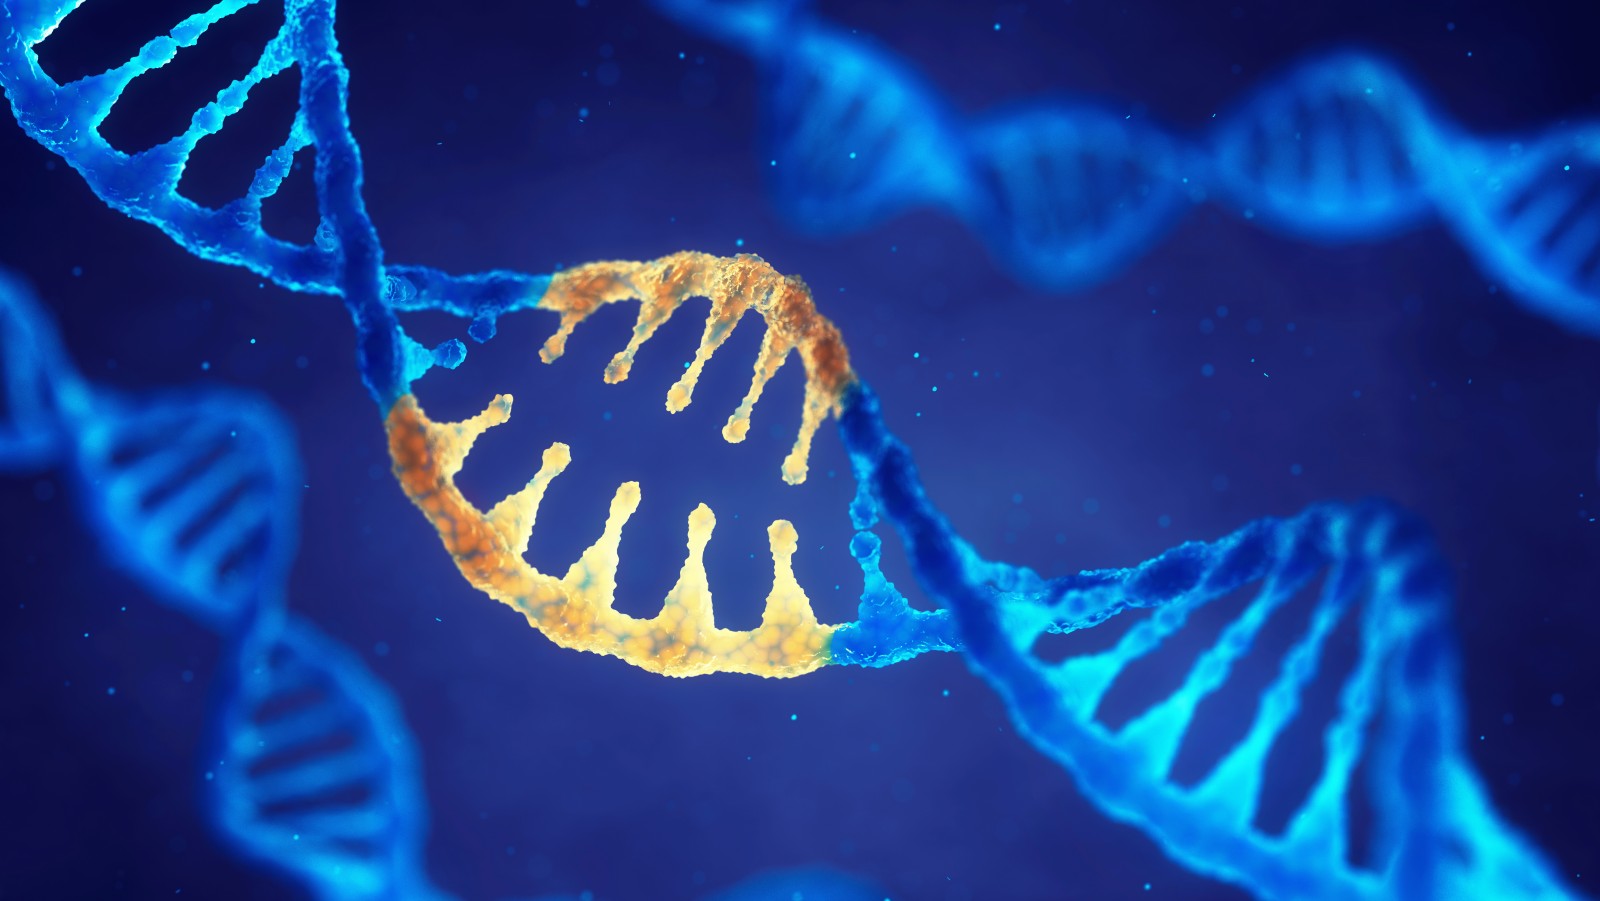 Illustration of mutated gene via Shutterstock.com